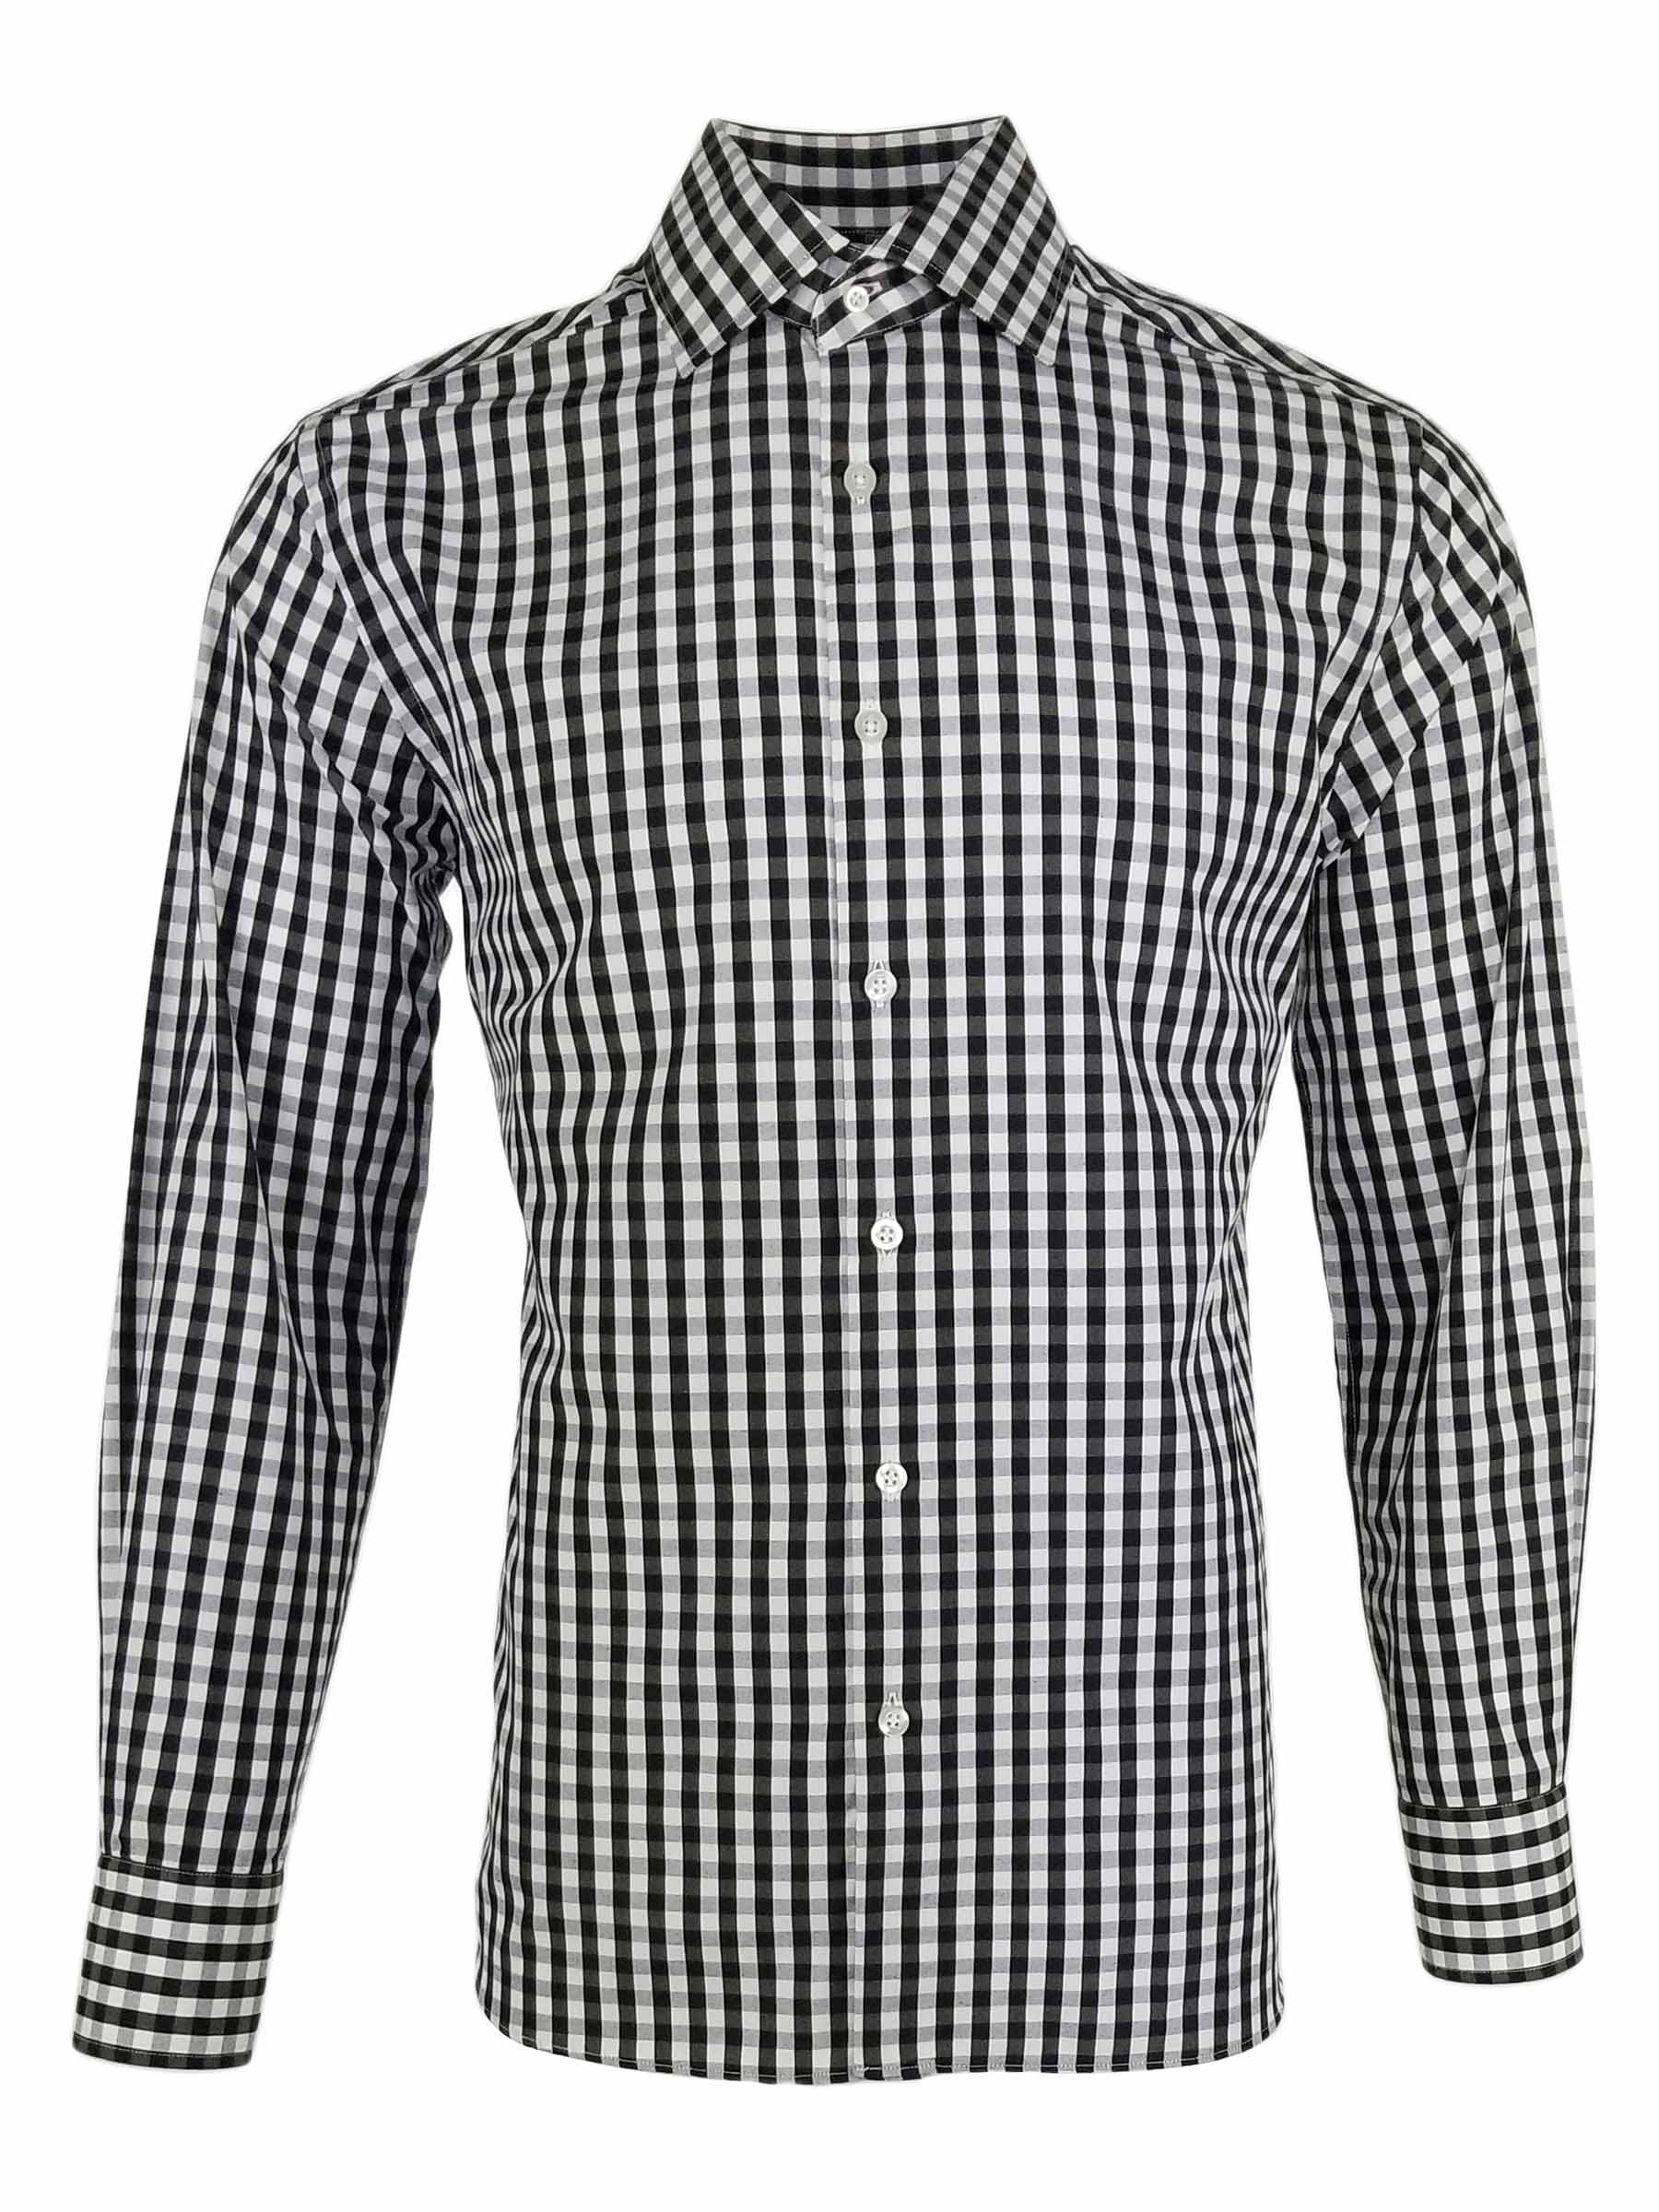 Men's Be Bold Shirt - Black White Check Long Sleeve - Uniform Edit